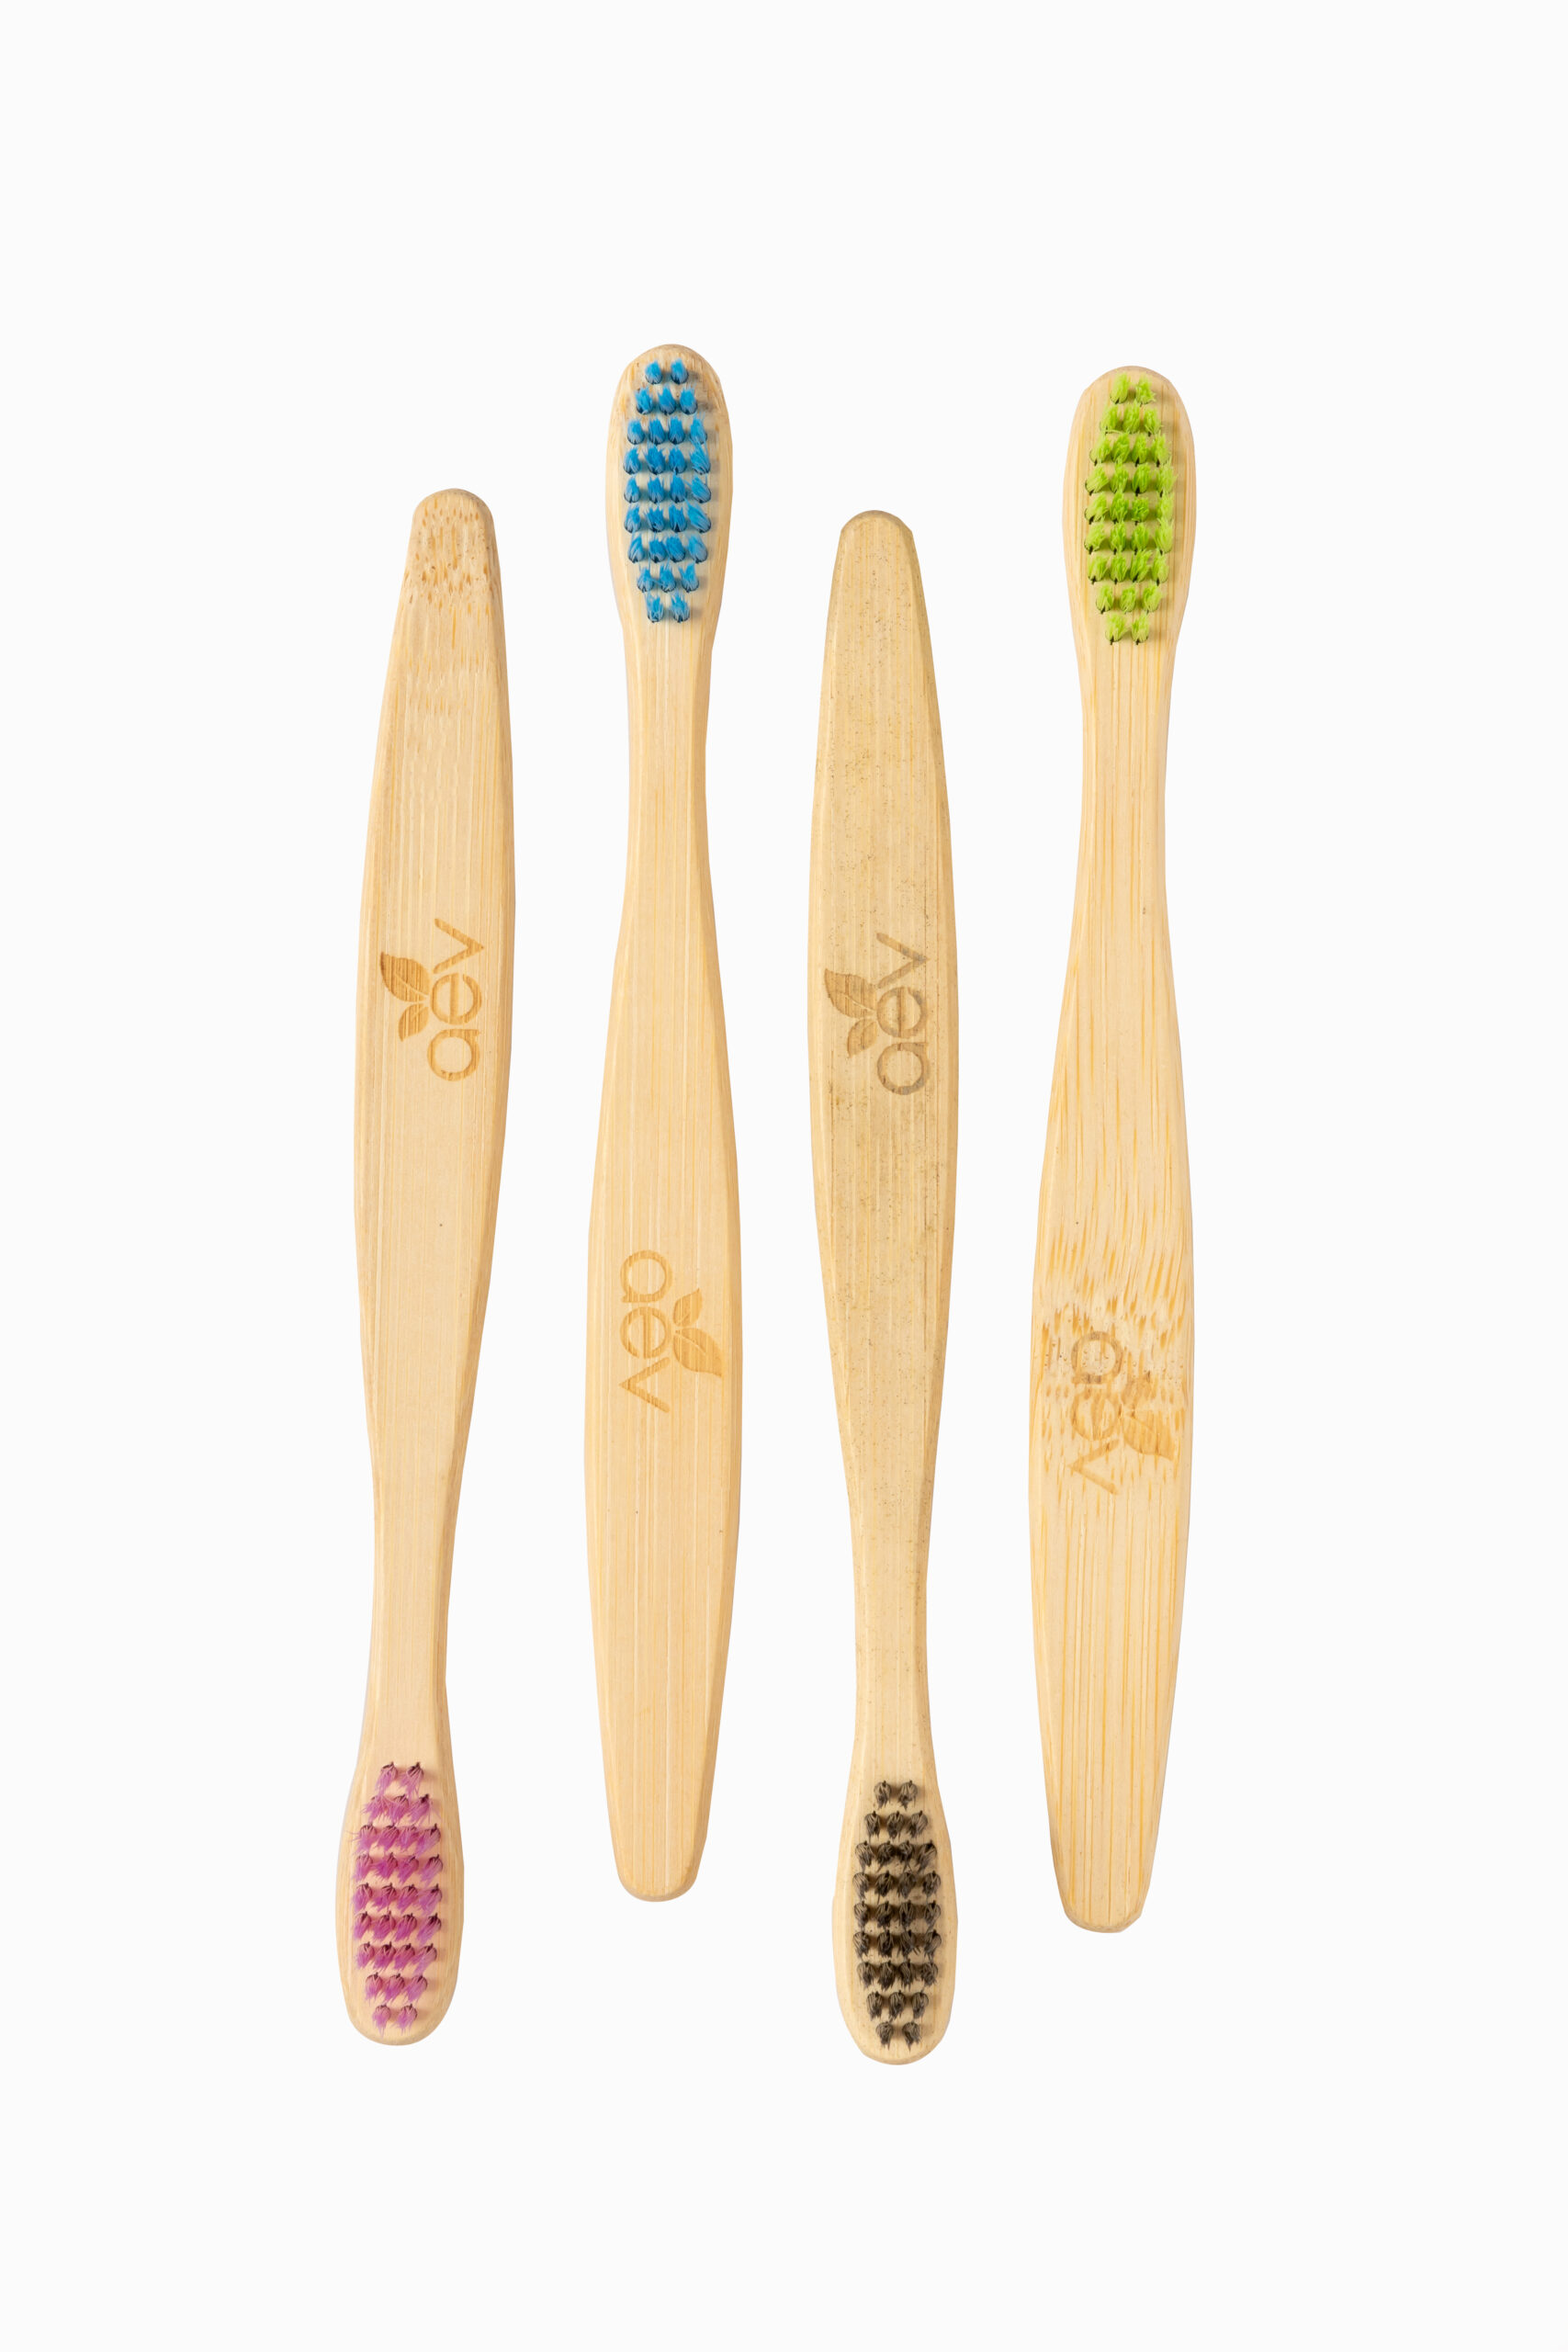 AEV Futura Bamboo Toothbrush for kids